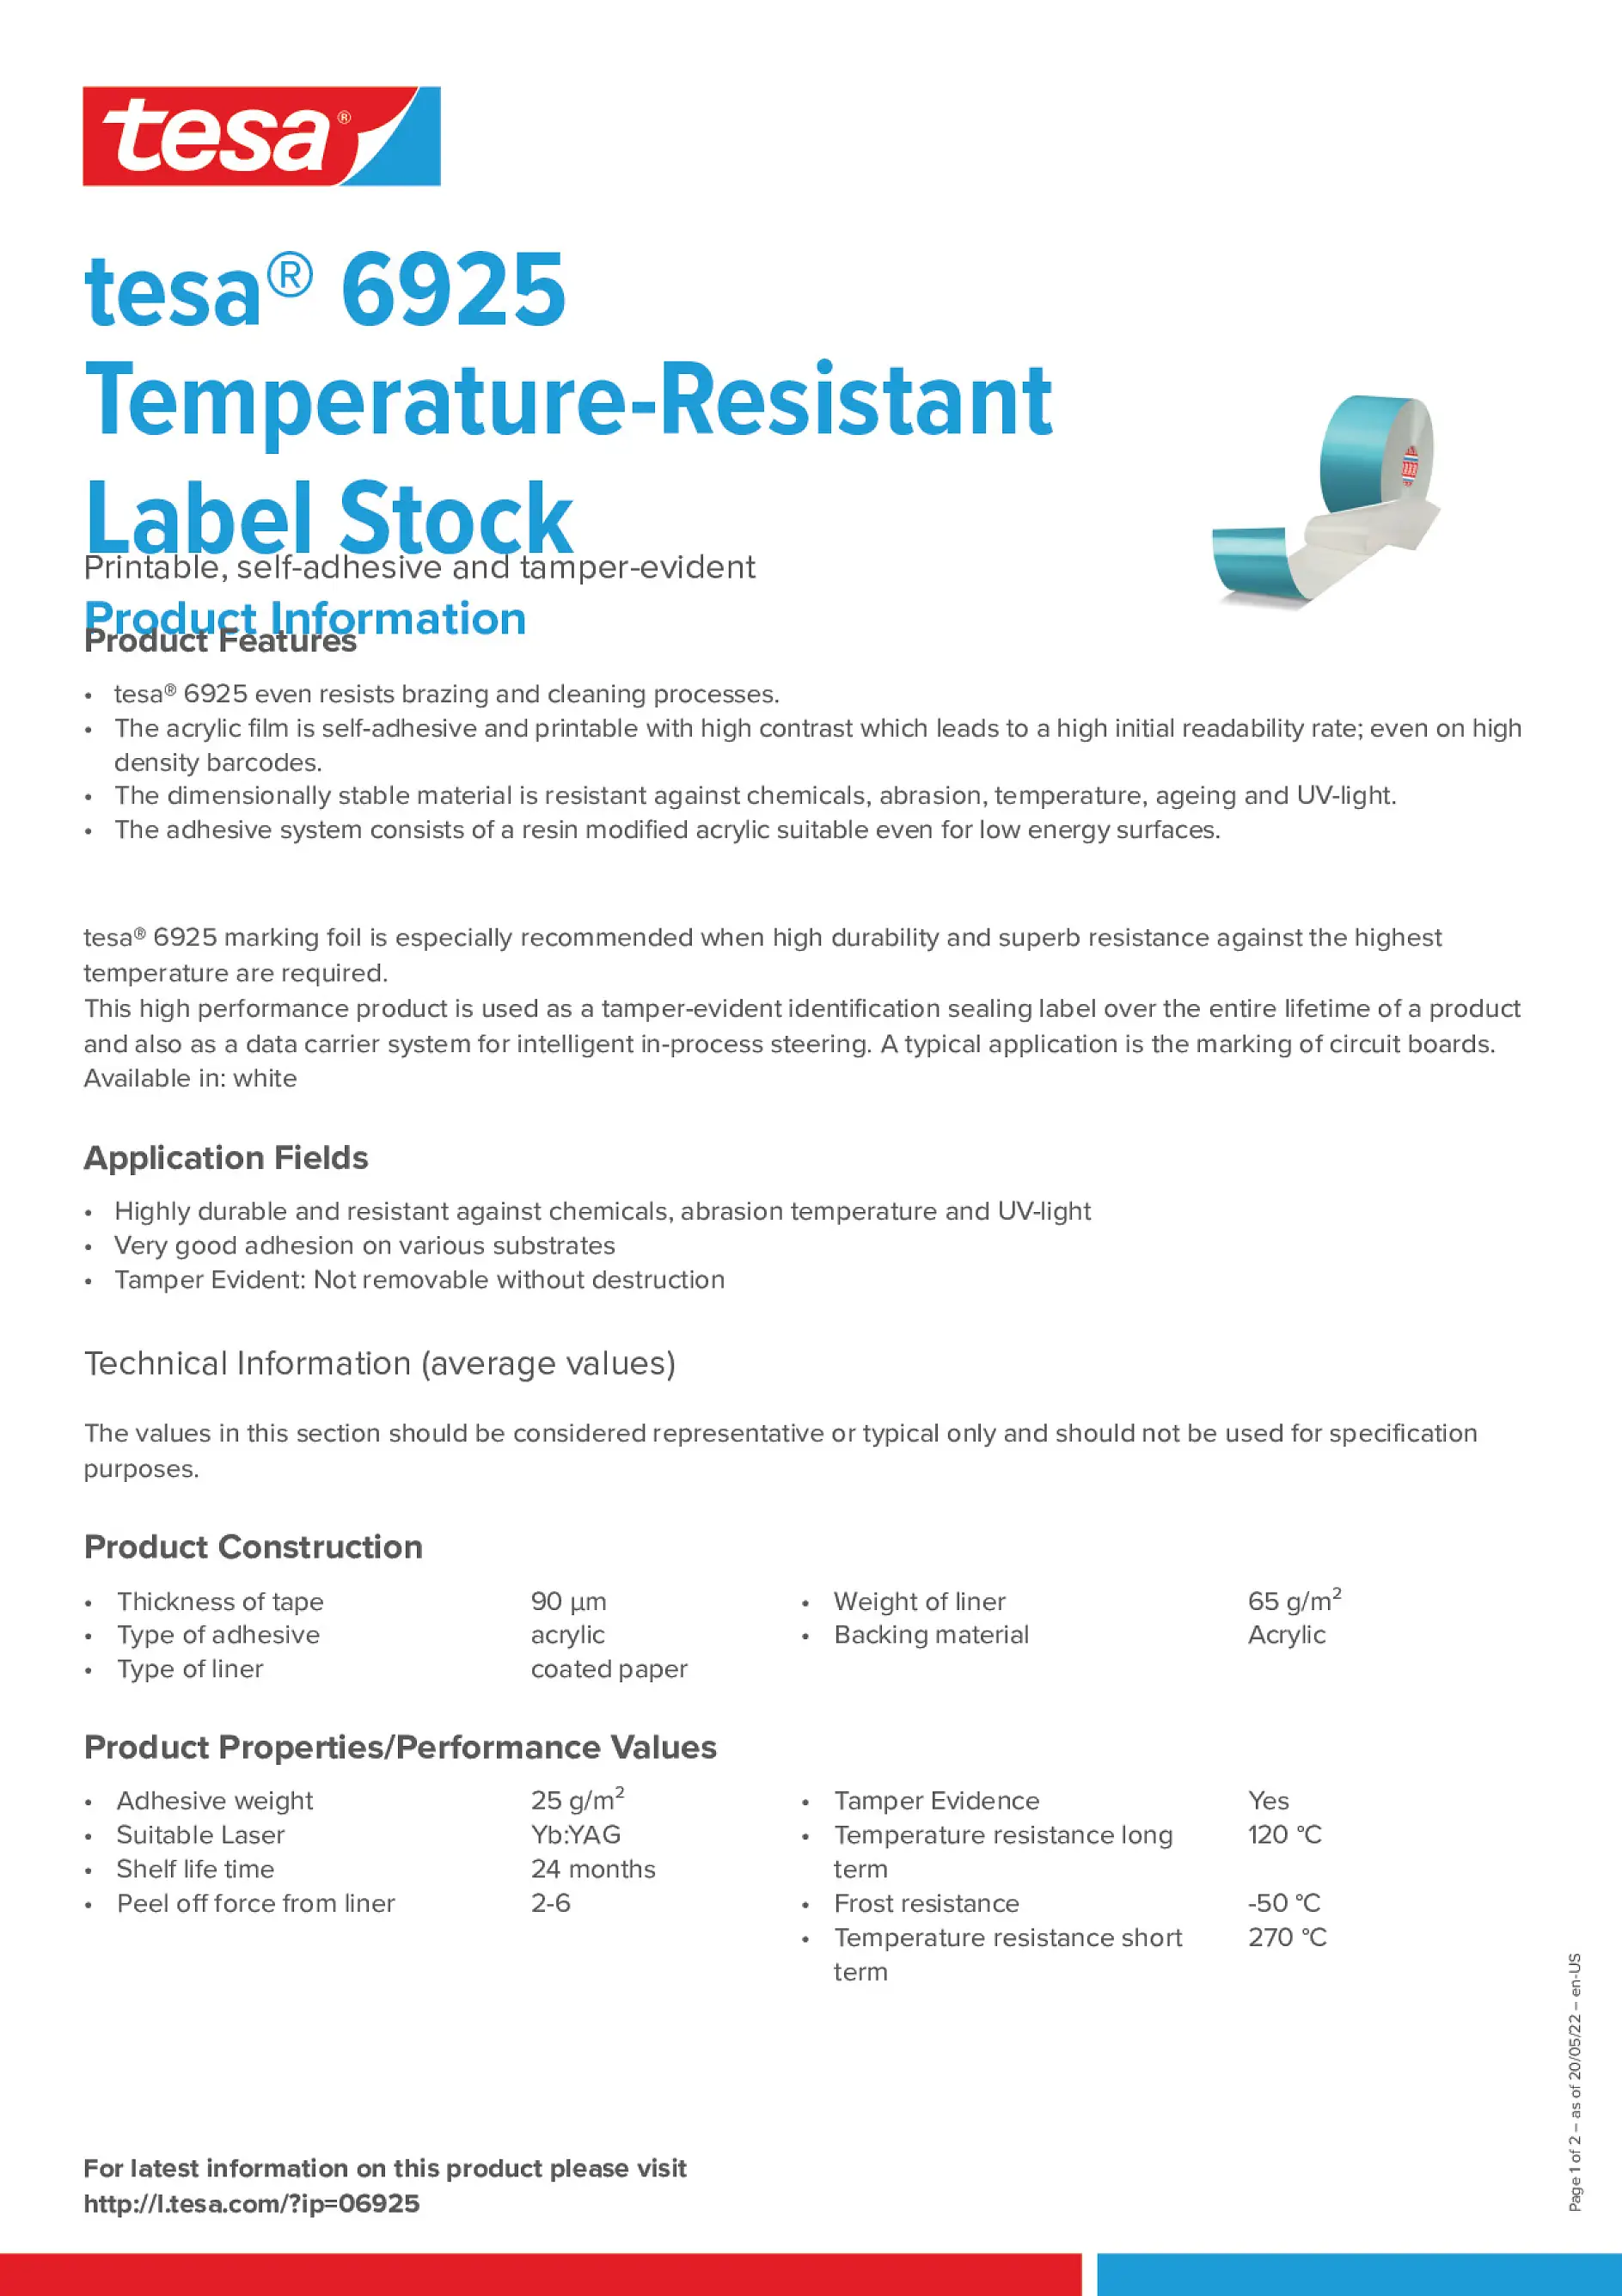 tesa_6925_Temperature-Resistant_Label_Stock_en-US